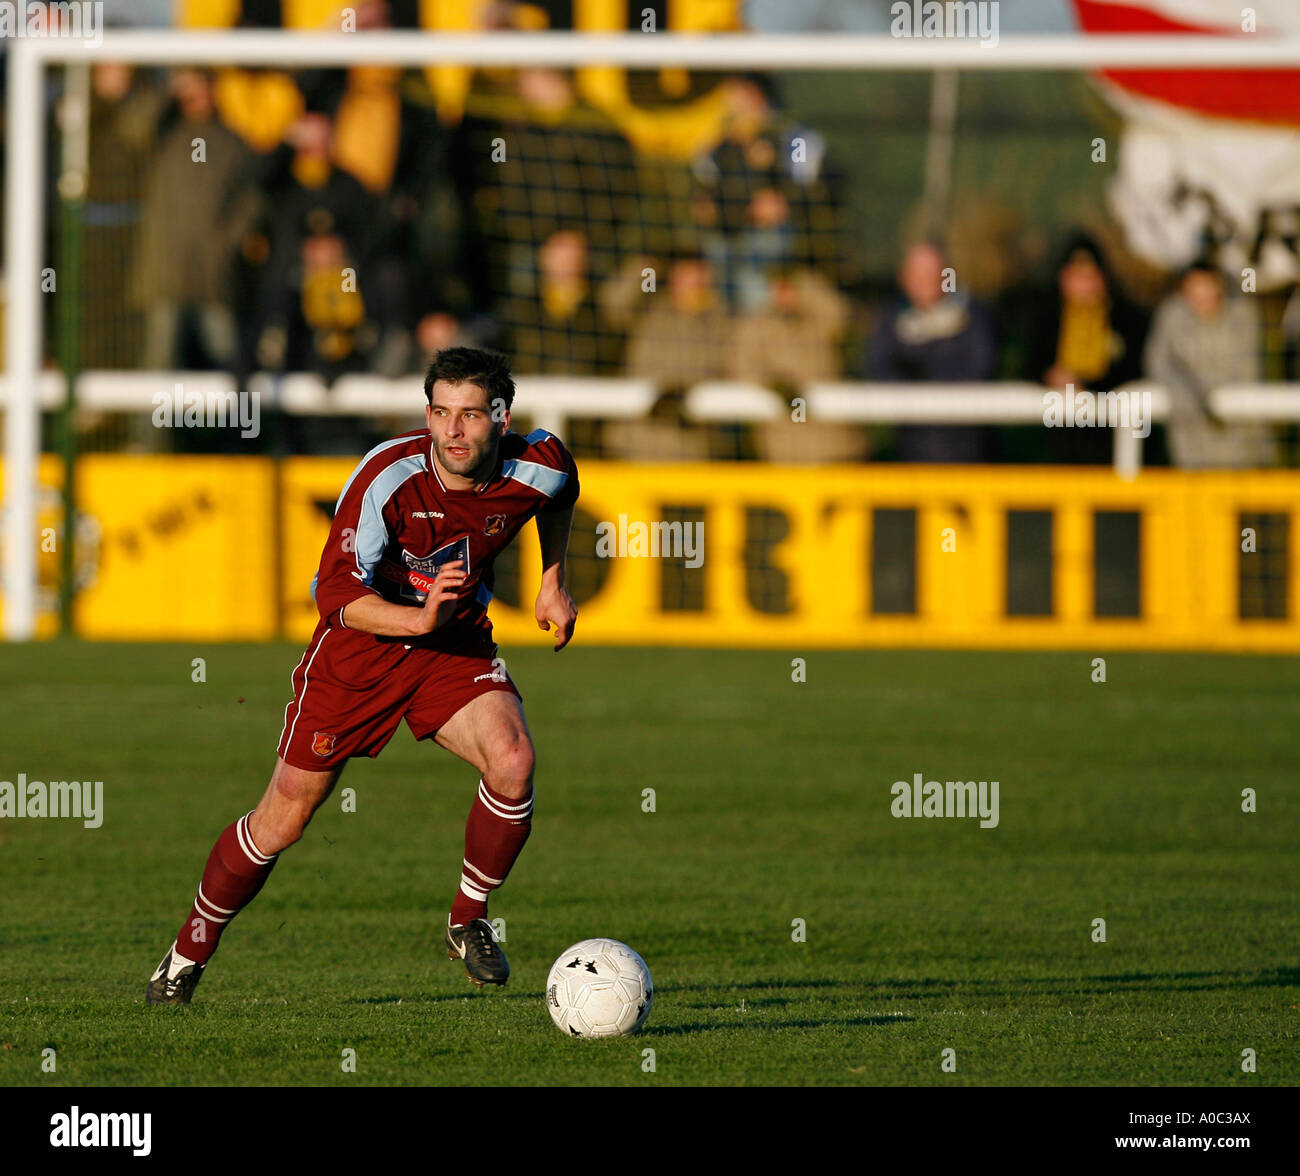 Playmobil England Football player footballer Stock Photo - Alamy